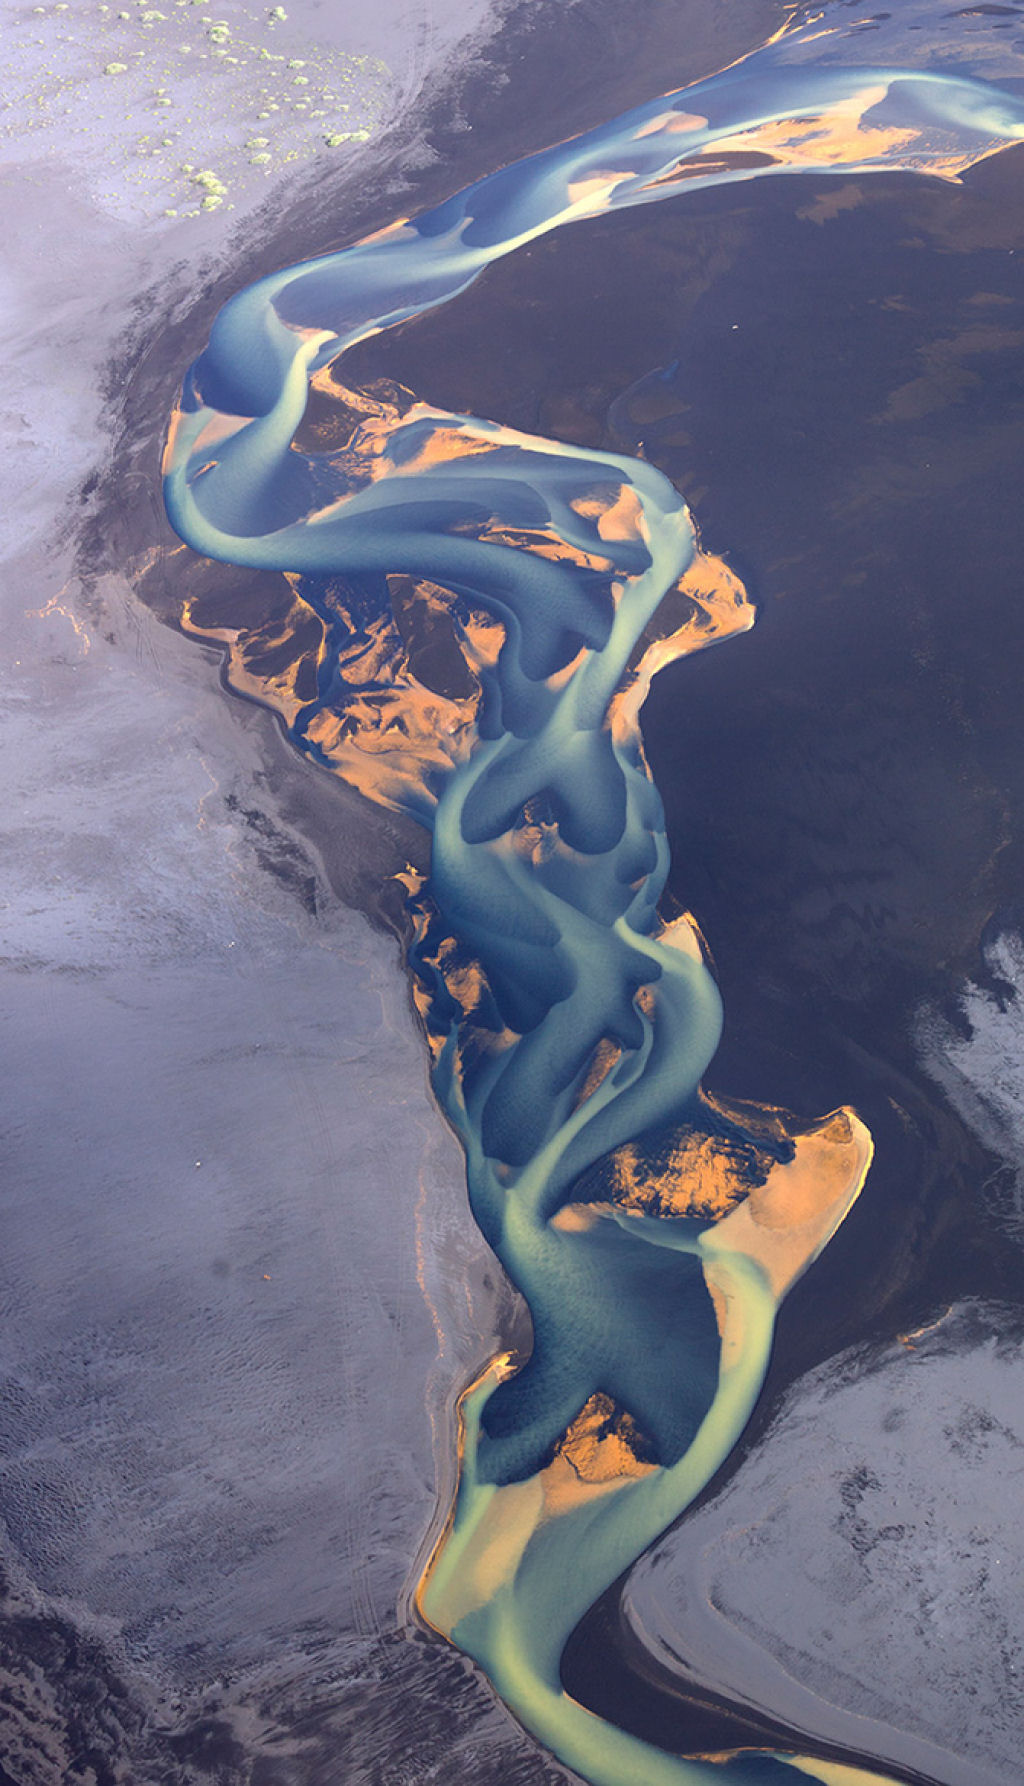 Fotos aéreas espetaculares de rios vulcânicos da Islândia 18